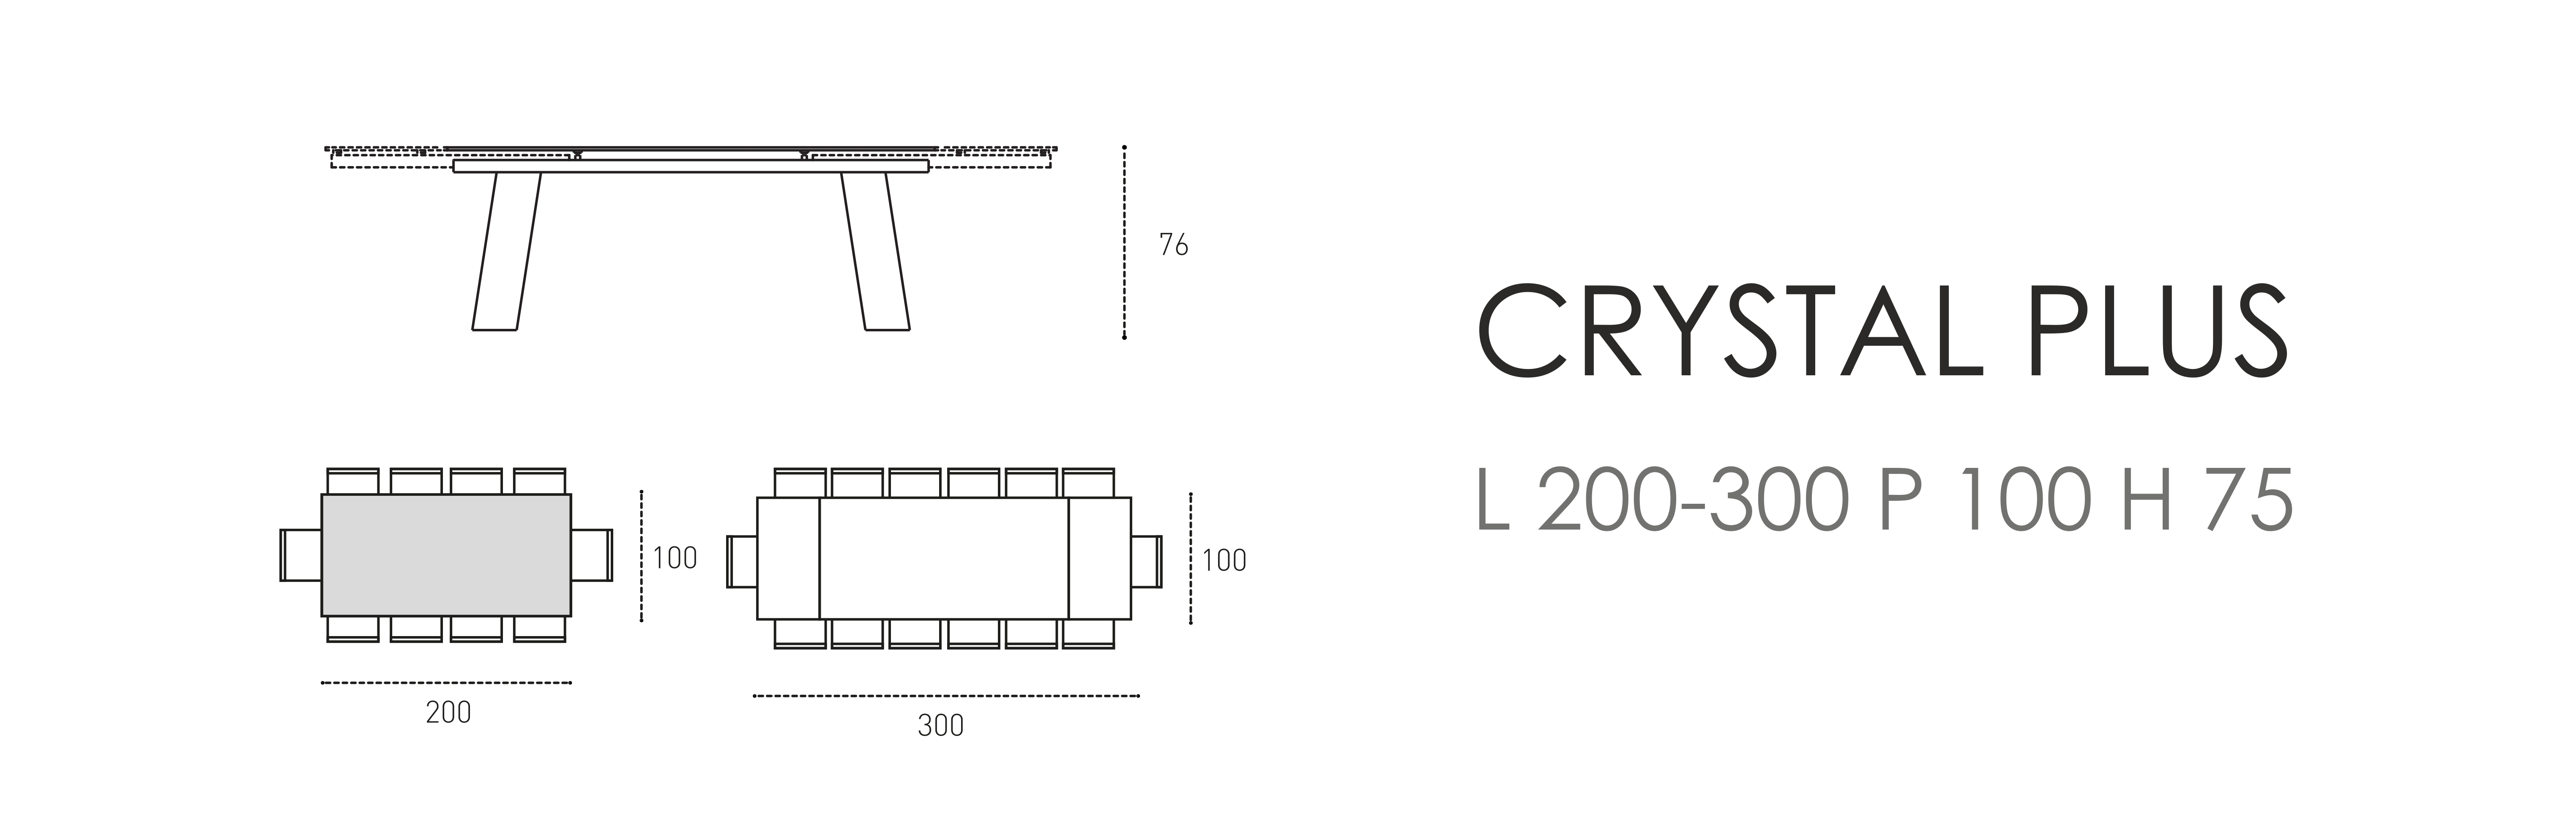 Crystal Plus L 200-300 P 100 H 75